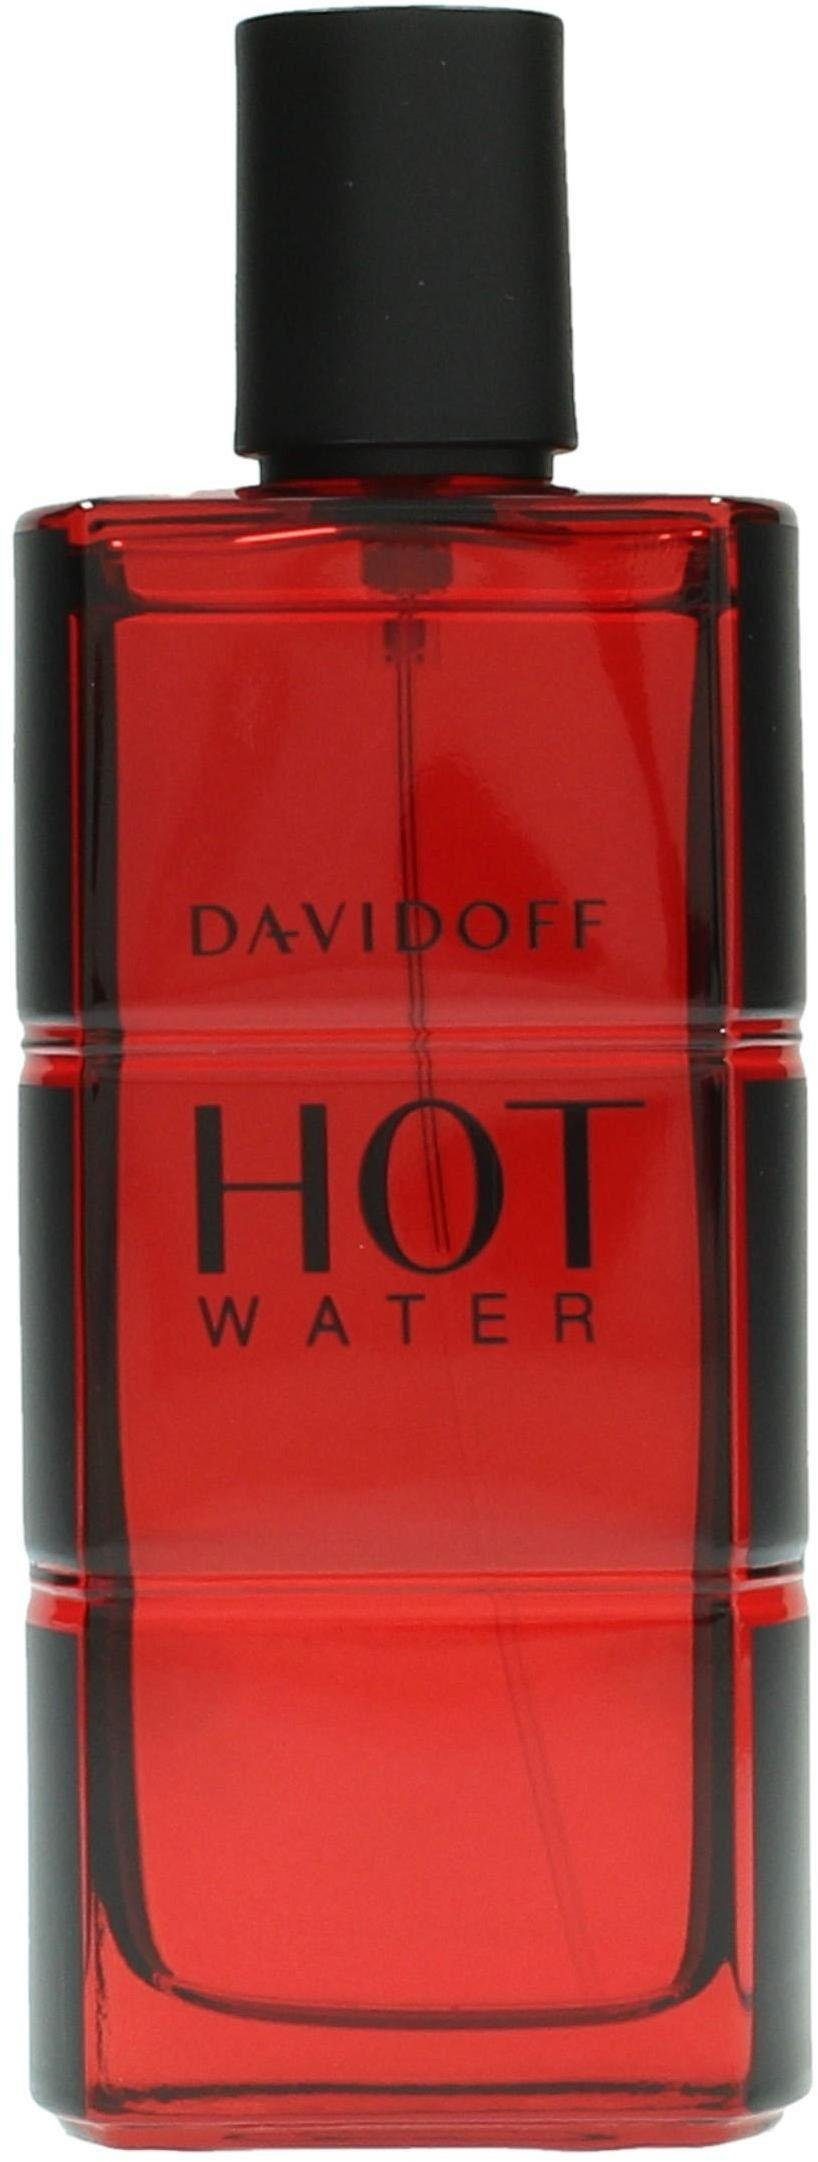 DAVIDOFF Eau Toilette de Hot Water